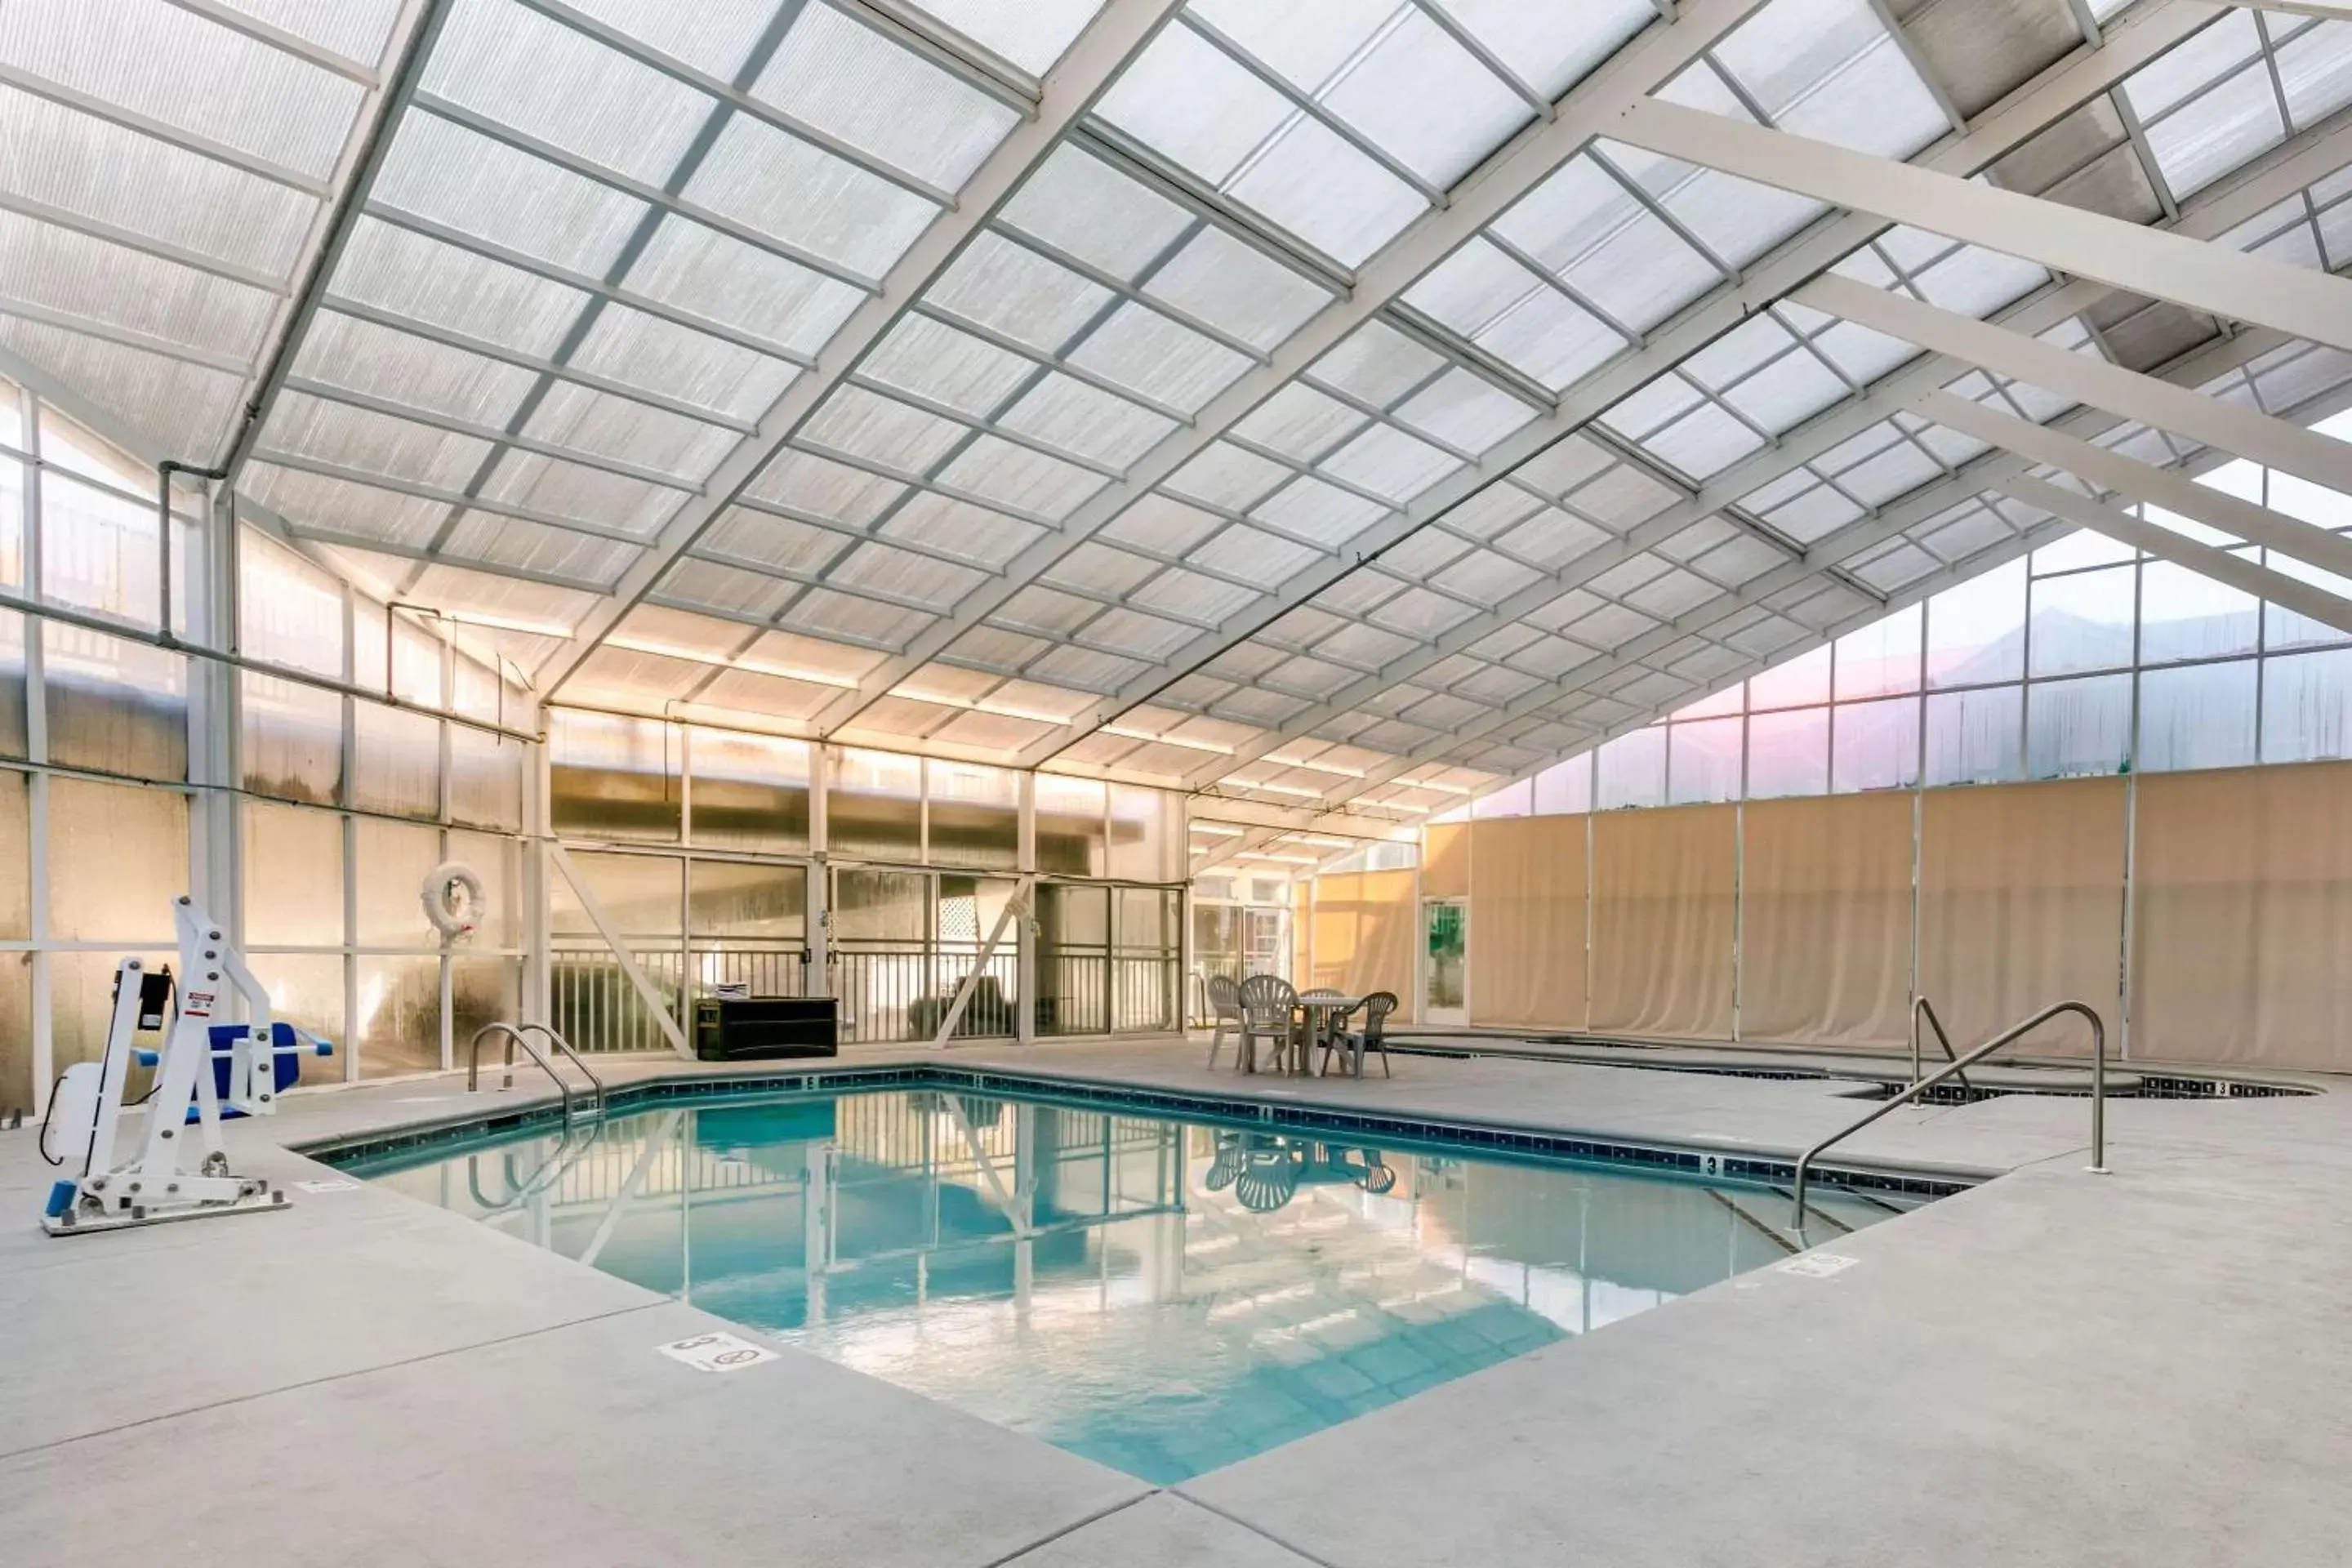 On site, Swimming Pool in Sleep Inn & Suites near Sports World Blvd